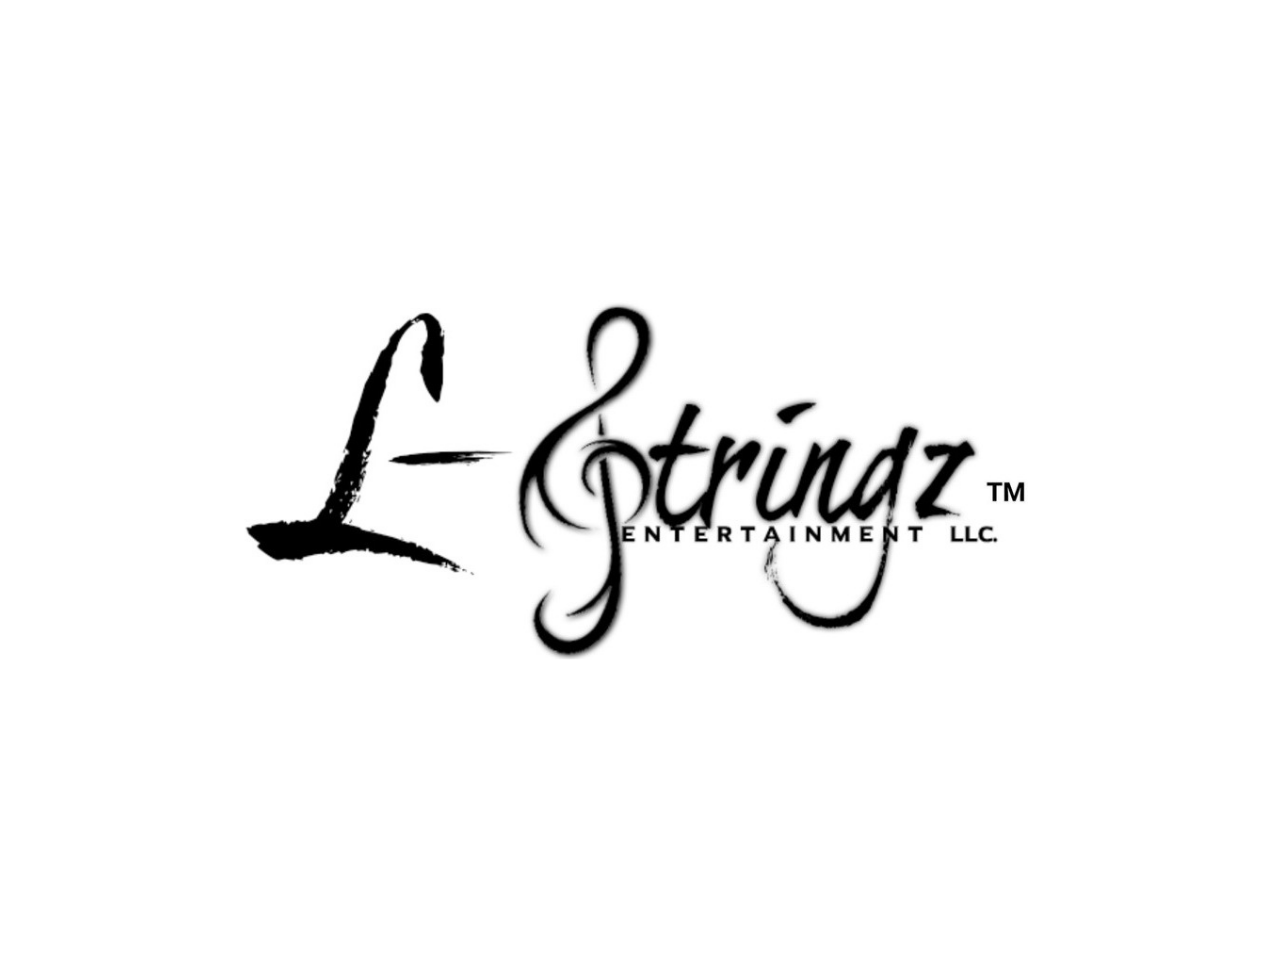 L-Stringz Entertainment, LLC